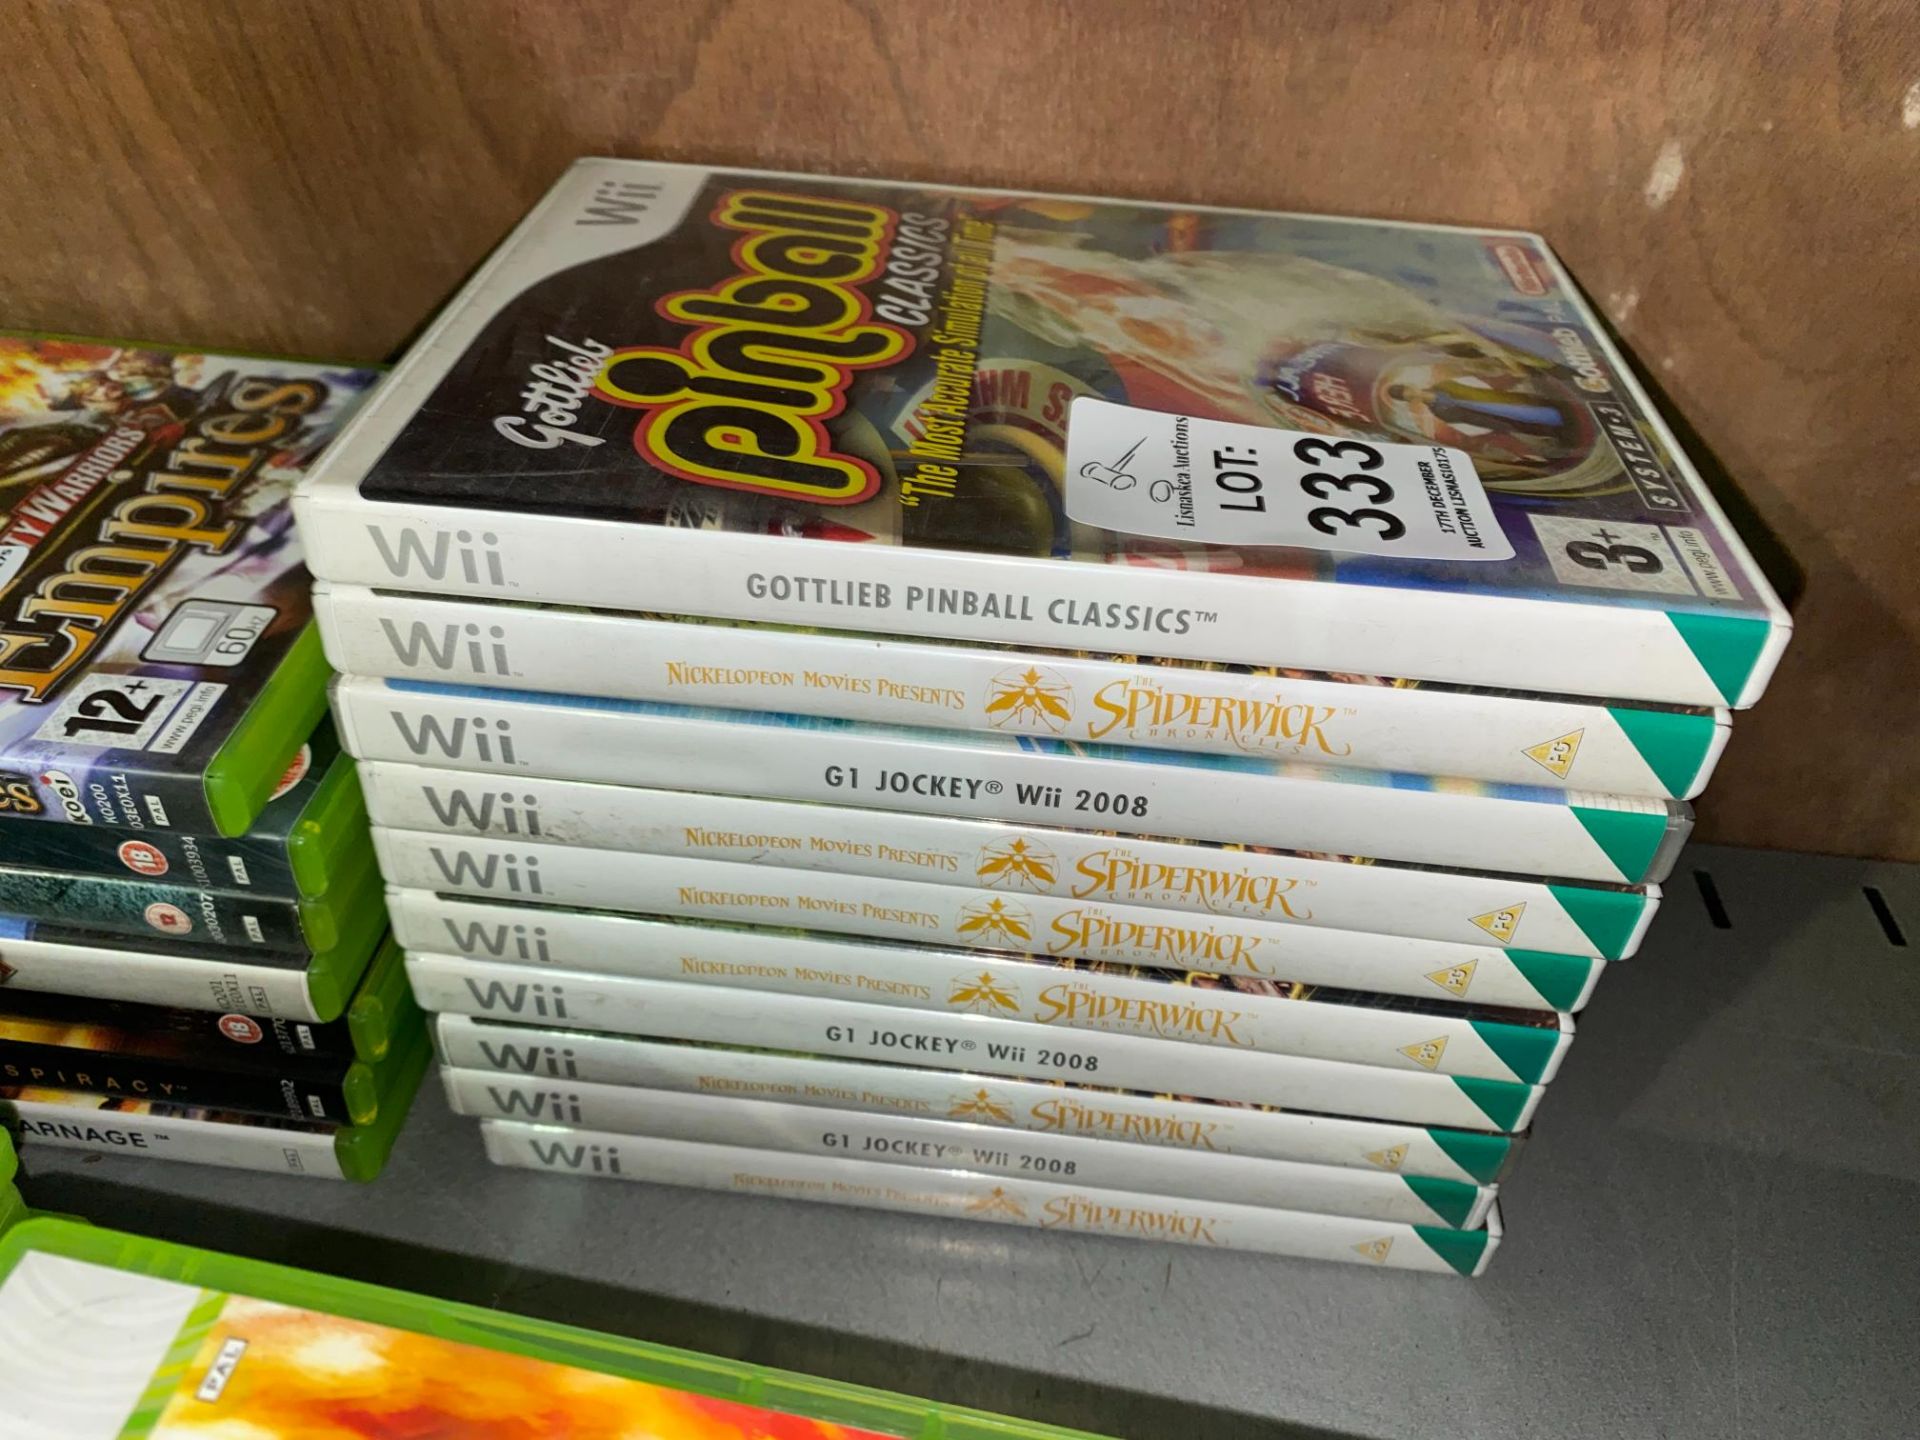 BUNDLE OF Wii GAMES